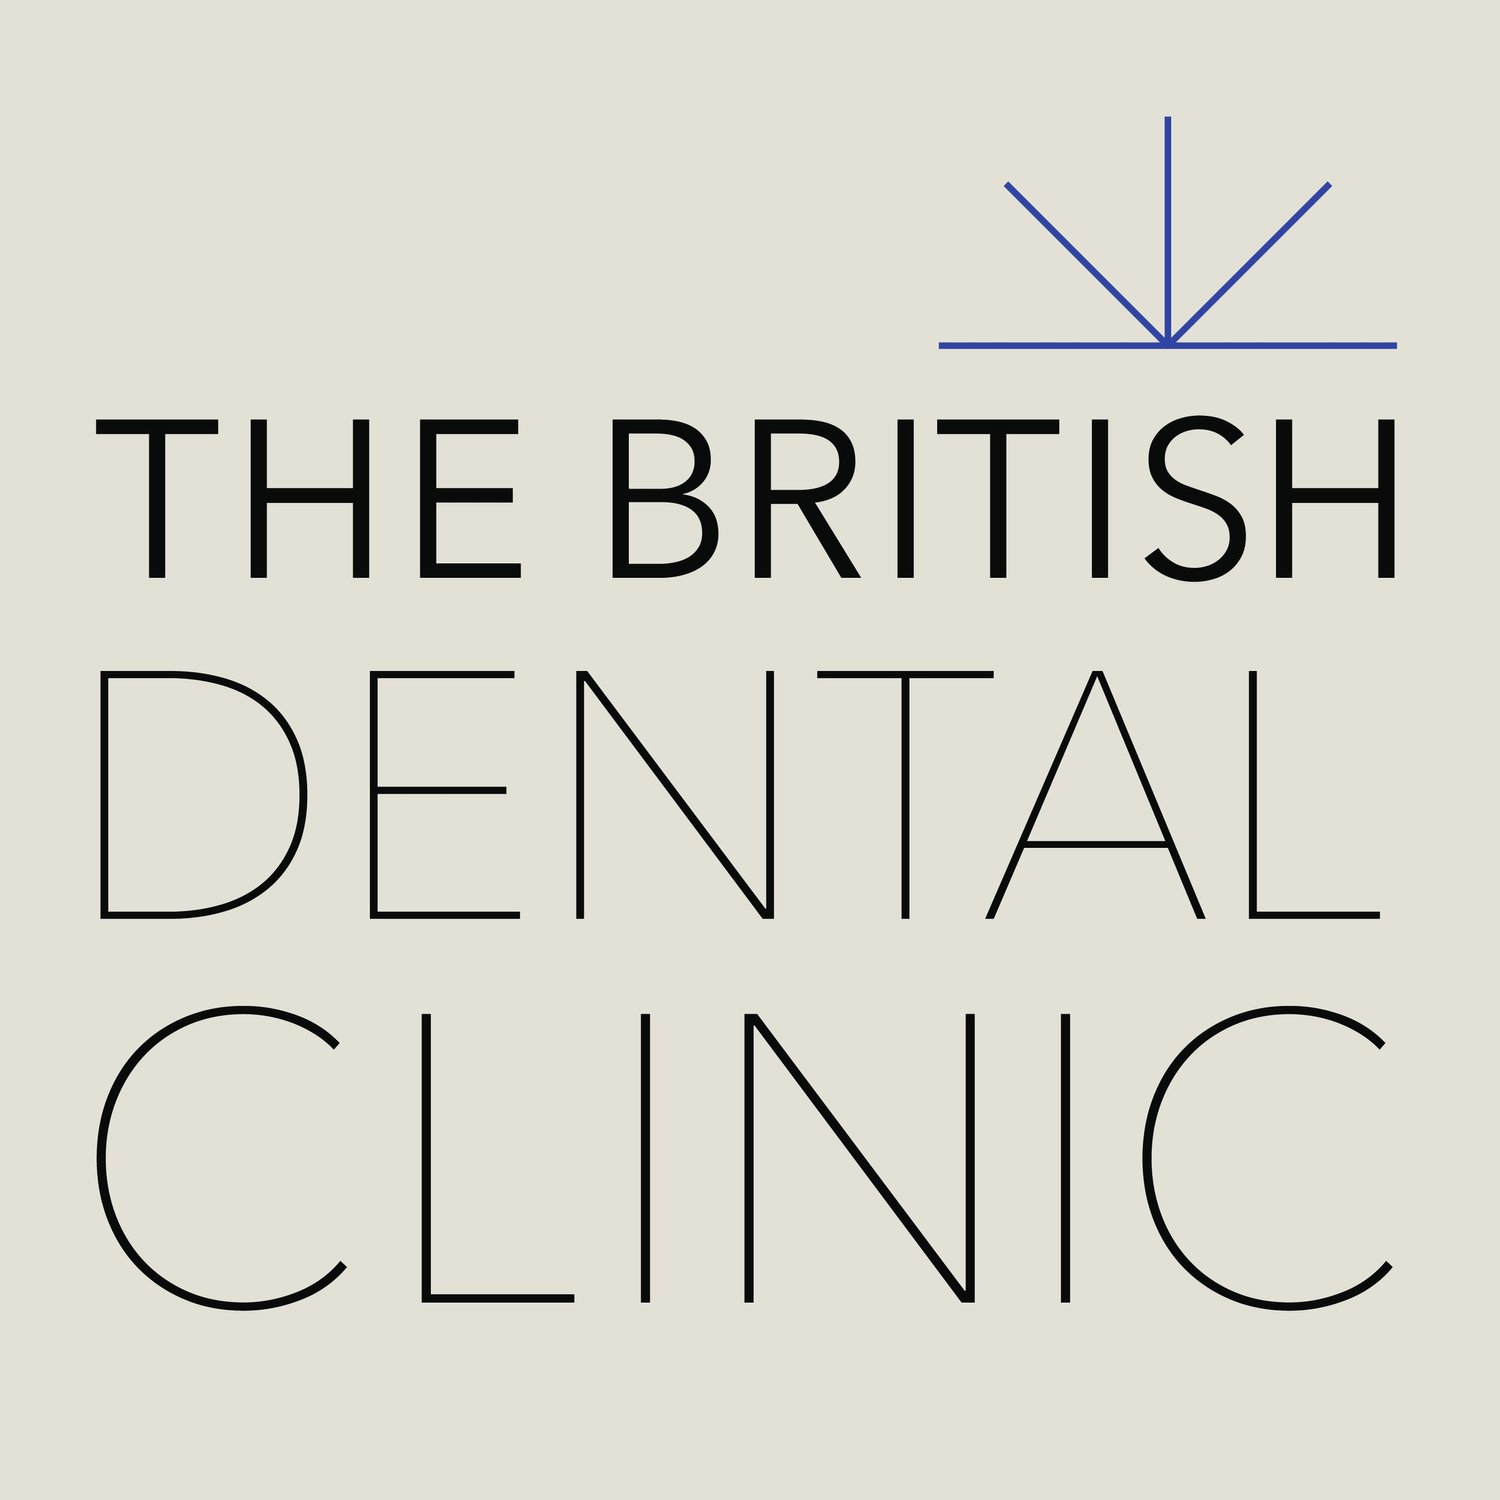 The British Dental Clinic